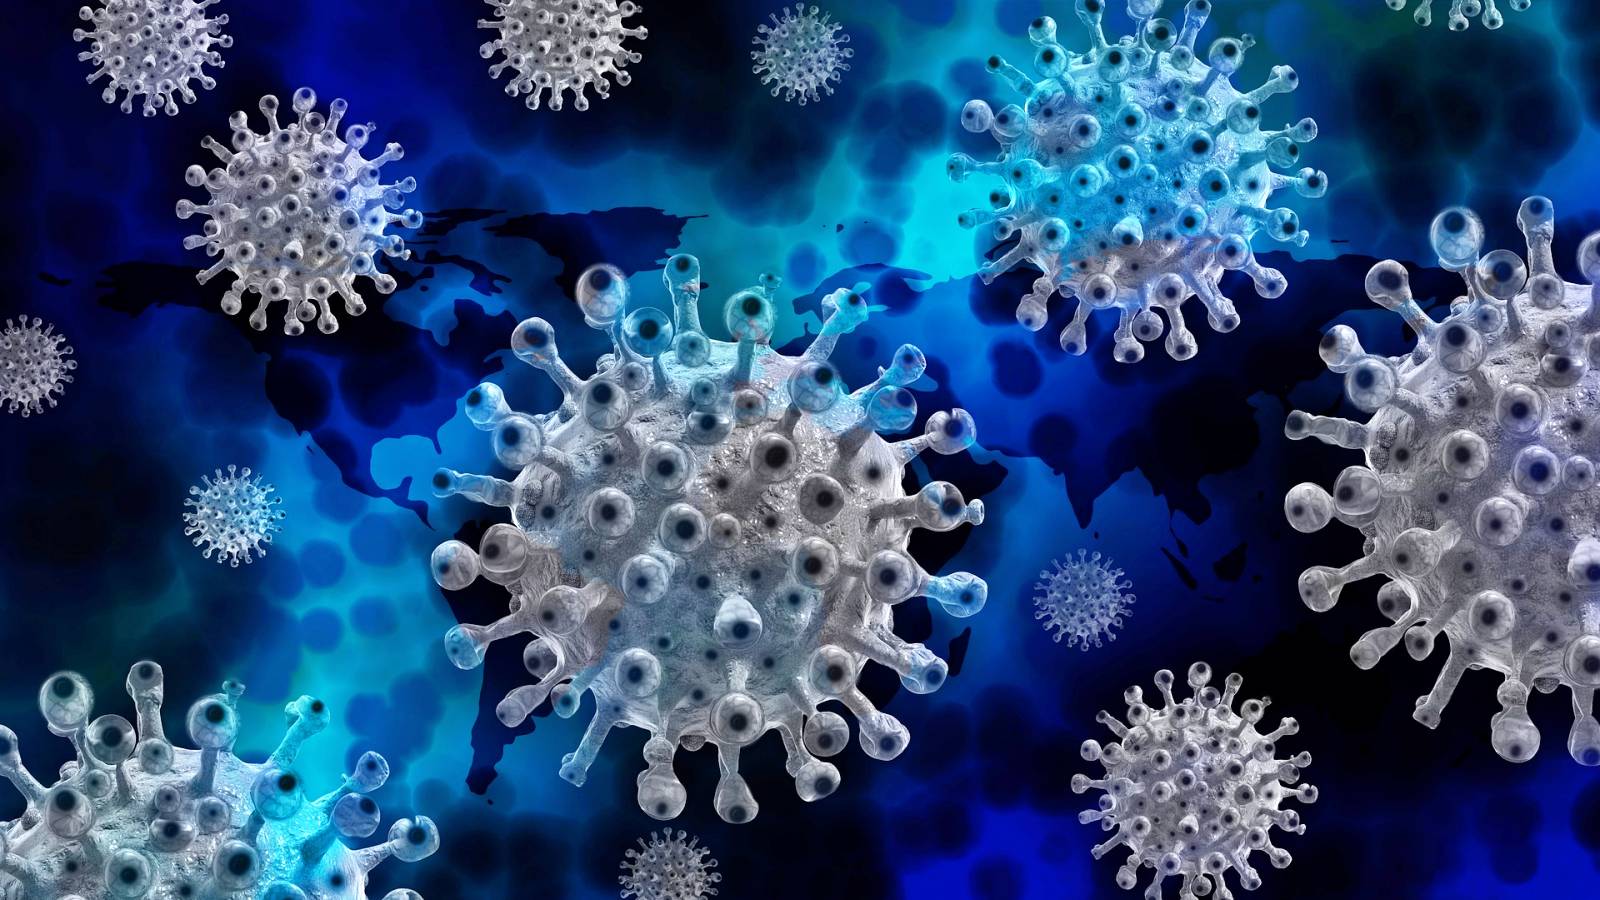 Coronavirus Romania Masura Anuntata Autoritati Problemele Europa